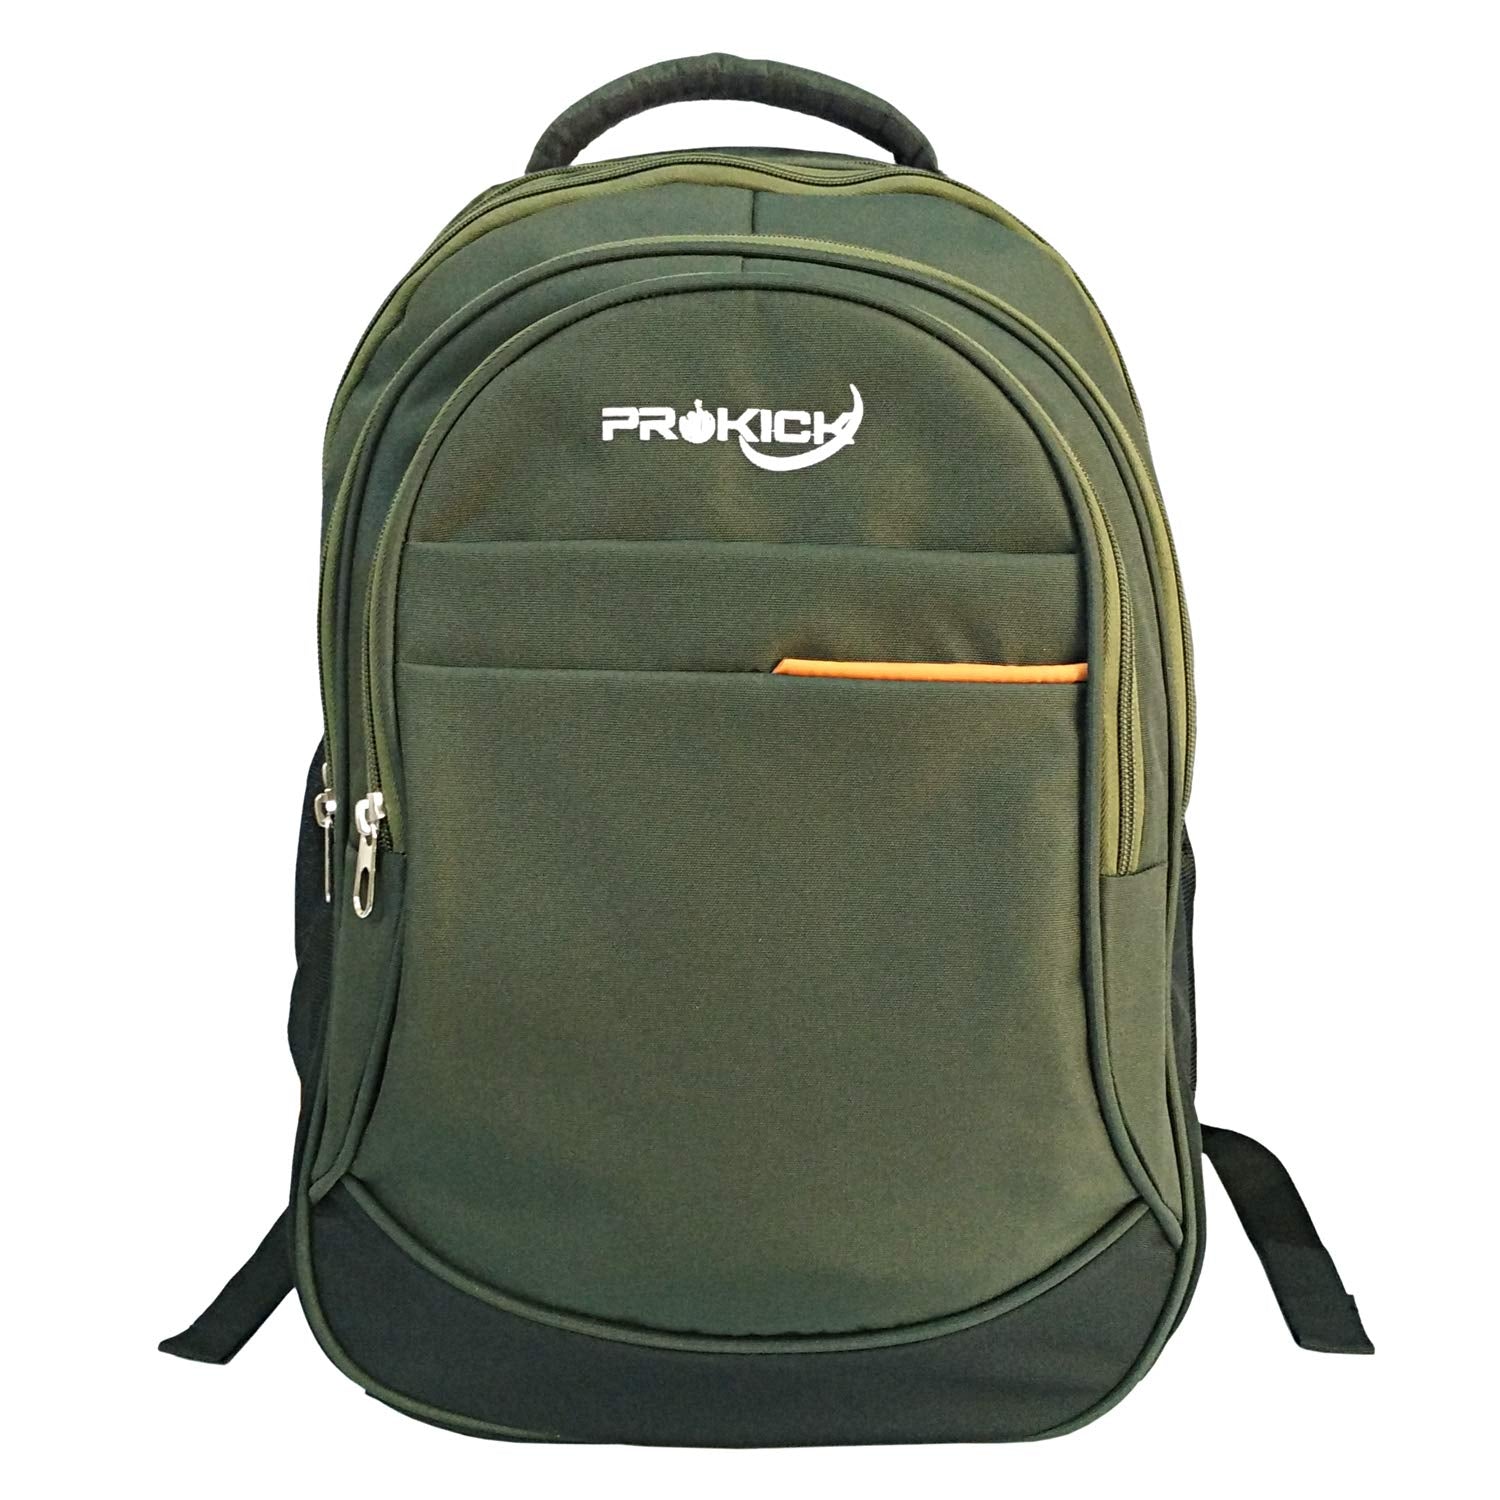 Prokick"Big-5" Panther Series Polyester 40L Backpack - Olive Green - Best Price online Prokicksports.com